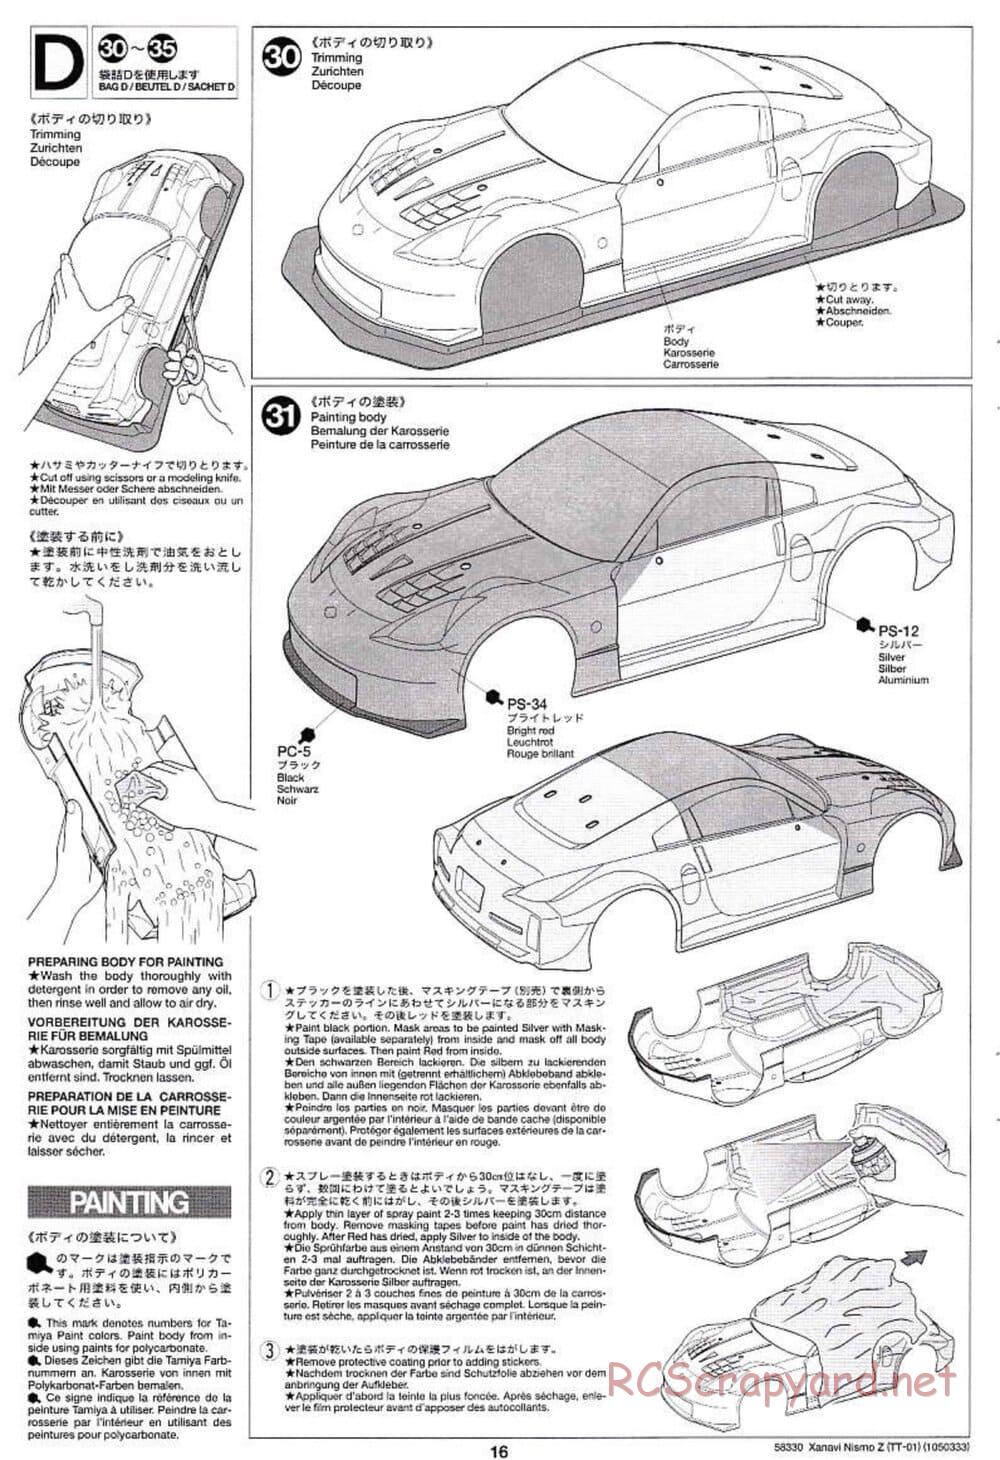 Tamiya - Xanavi Nismo Z - TT-01 Chassis - Manual - Page 16